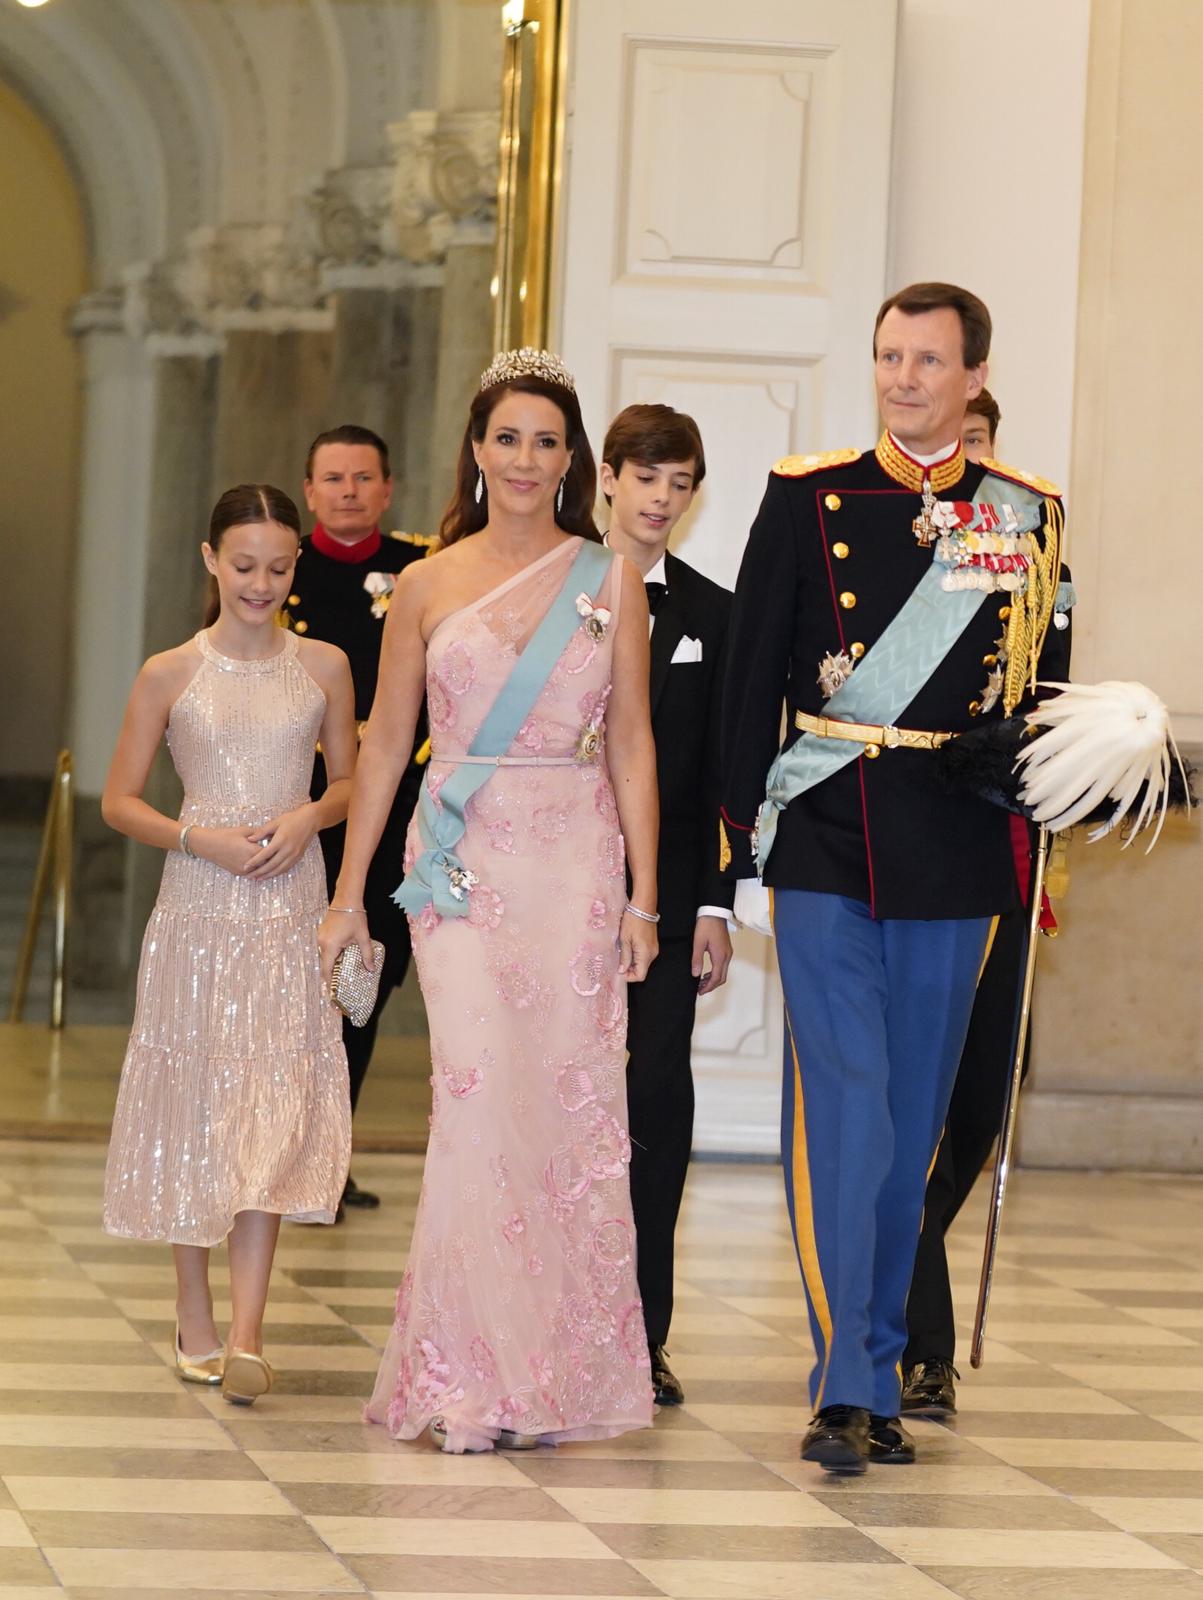 Prinsesse og Joachim ankom med børnene: Se flotte gallalooks | BILLED-BLADET